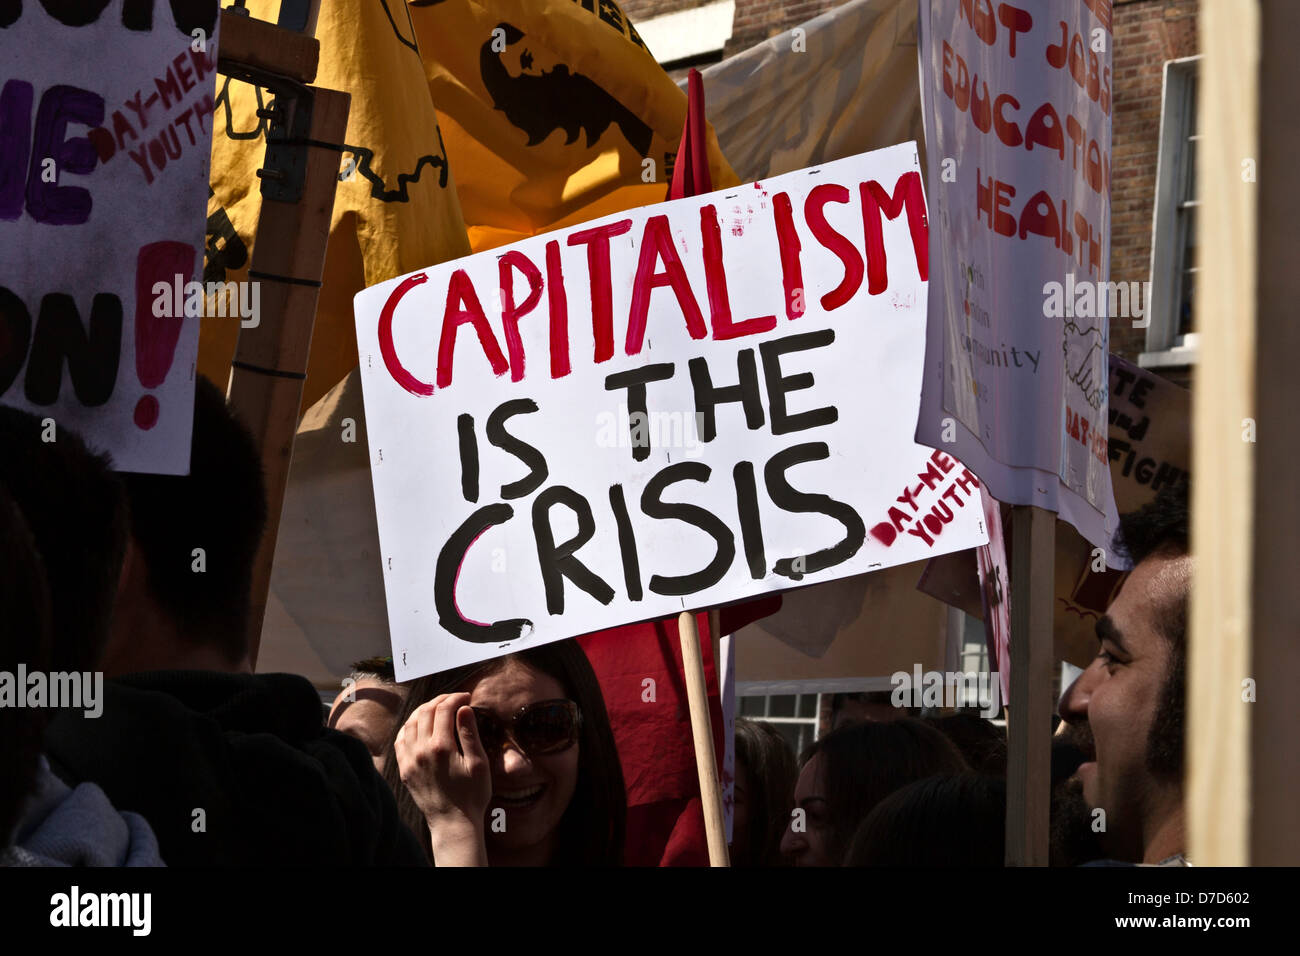 Der Kapitalismus ist die Krise - Plakat am Maifeiertag Protest Kundgebung in London Stockfoto